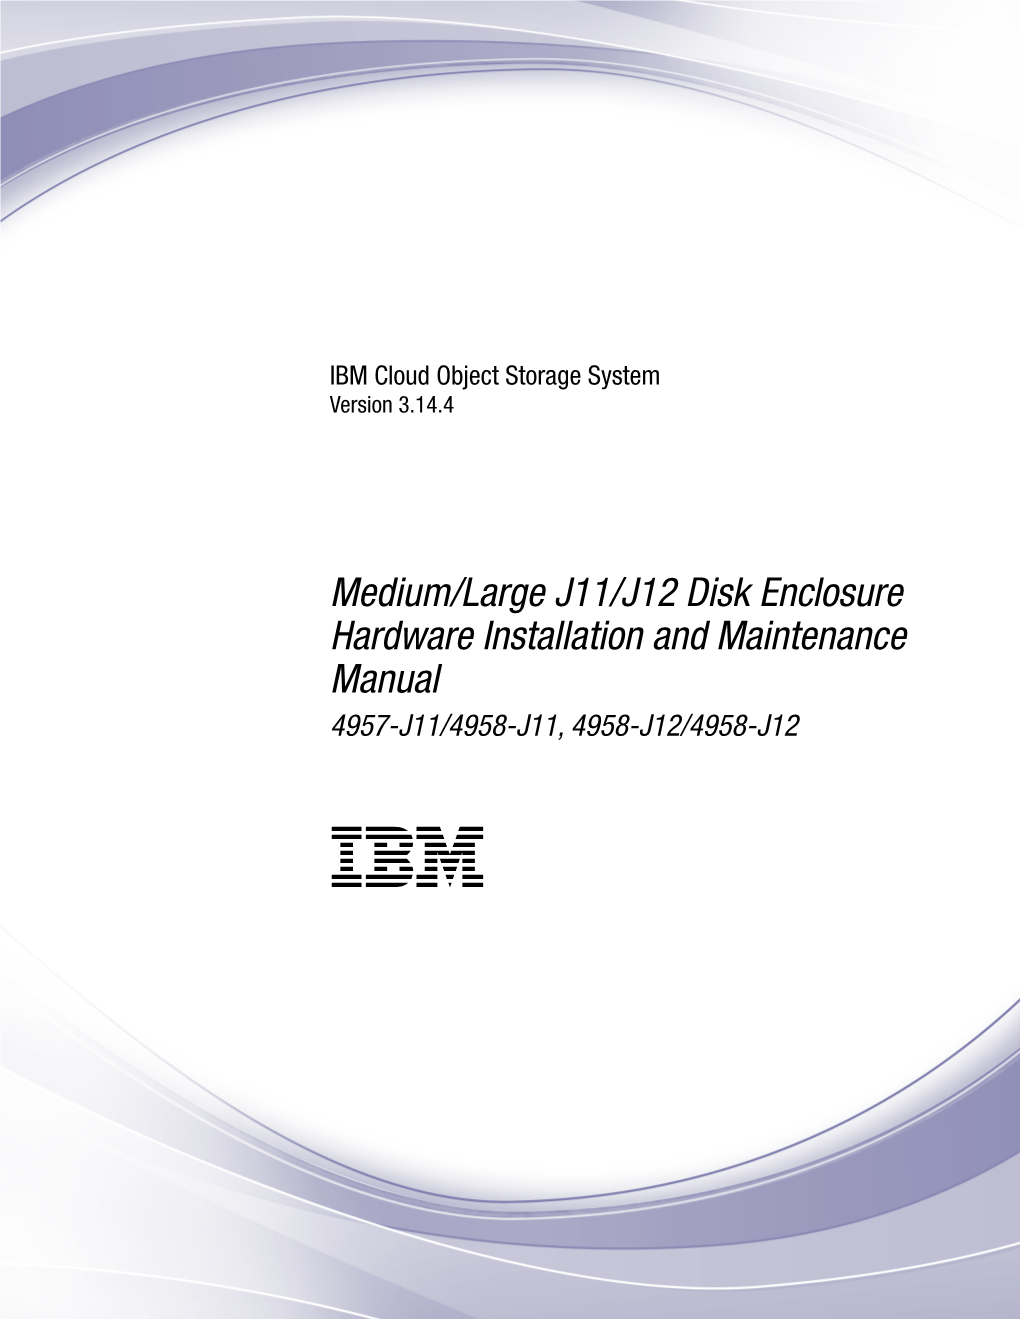 IBM Cloud Object Storage System: Medium/Large J11/J12 Disk Enclosure Hardware Installation and Maintenance Manual 4957-J11/4958-J11, 4958-J12/4958-J12 Figures